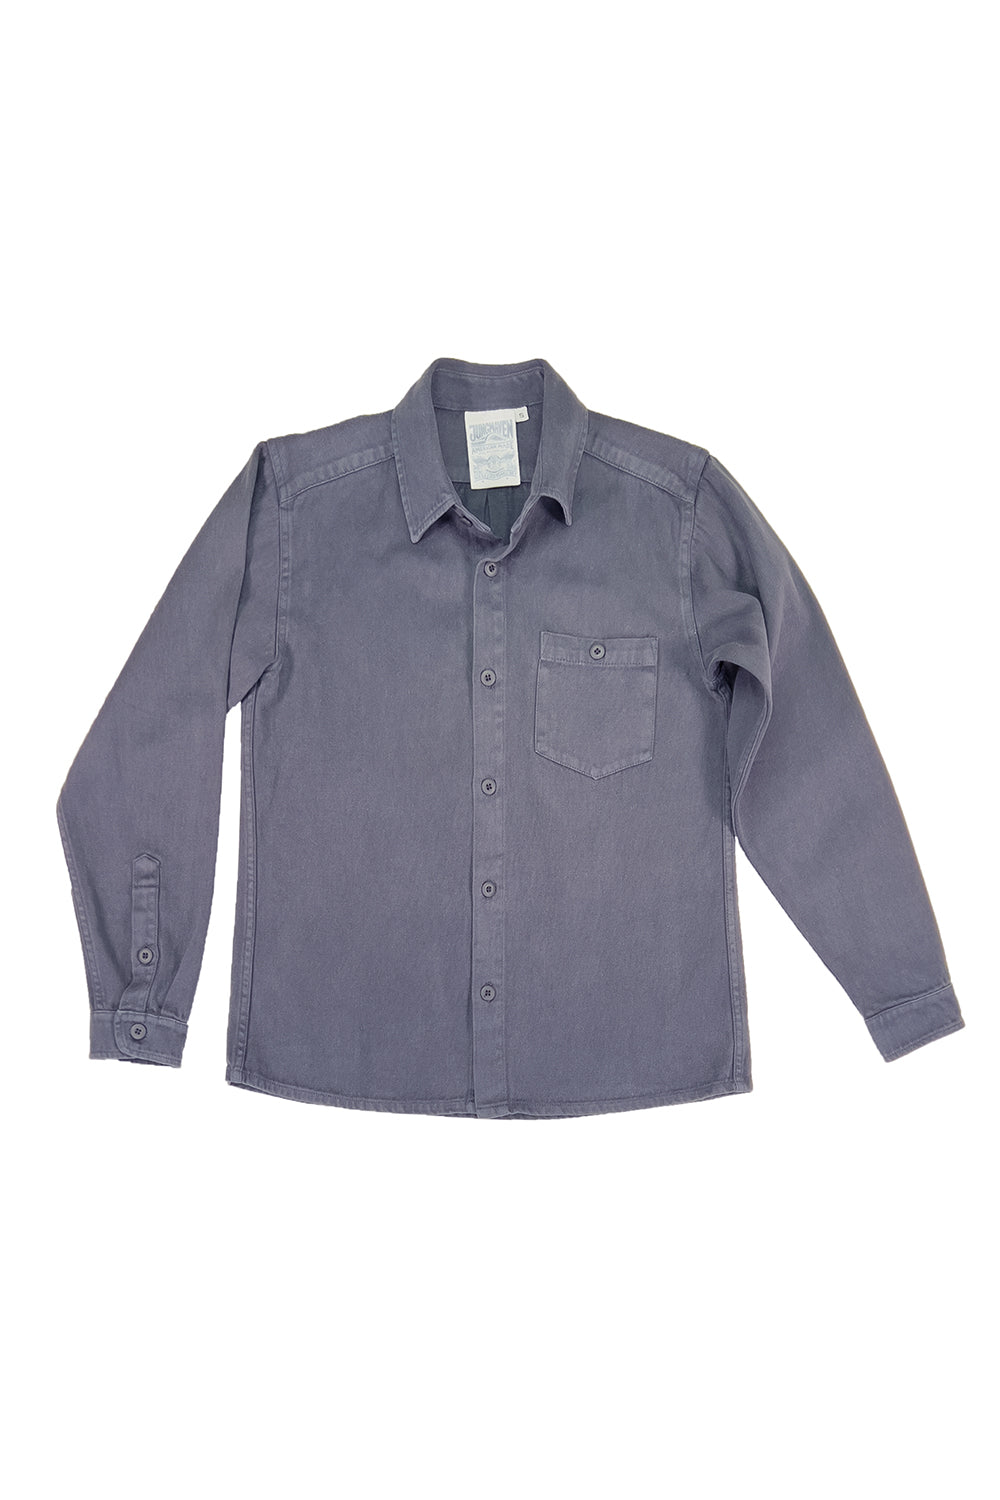 Topanga Shirt | Jungmaven Hemp Clothing & Accessories / Color: Diesel Gray